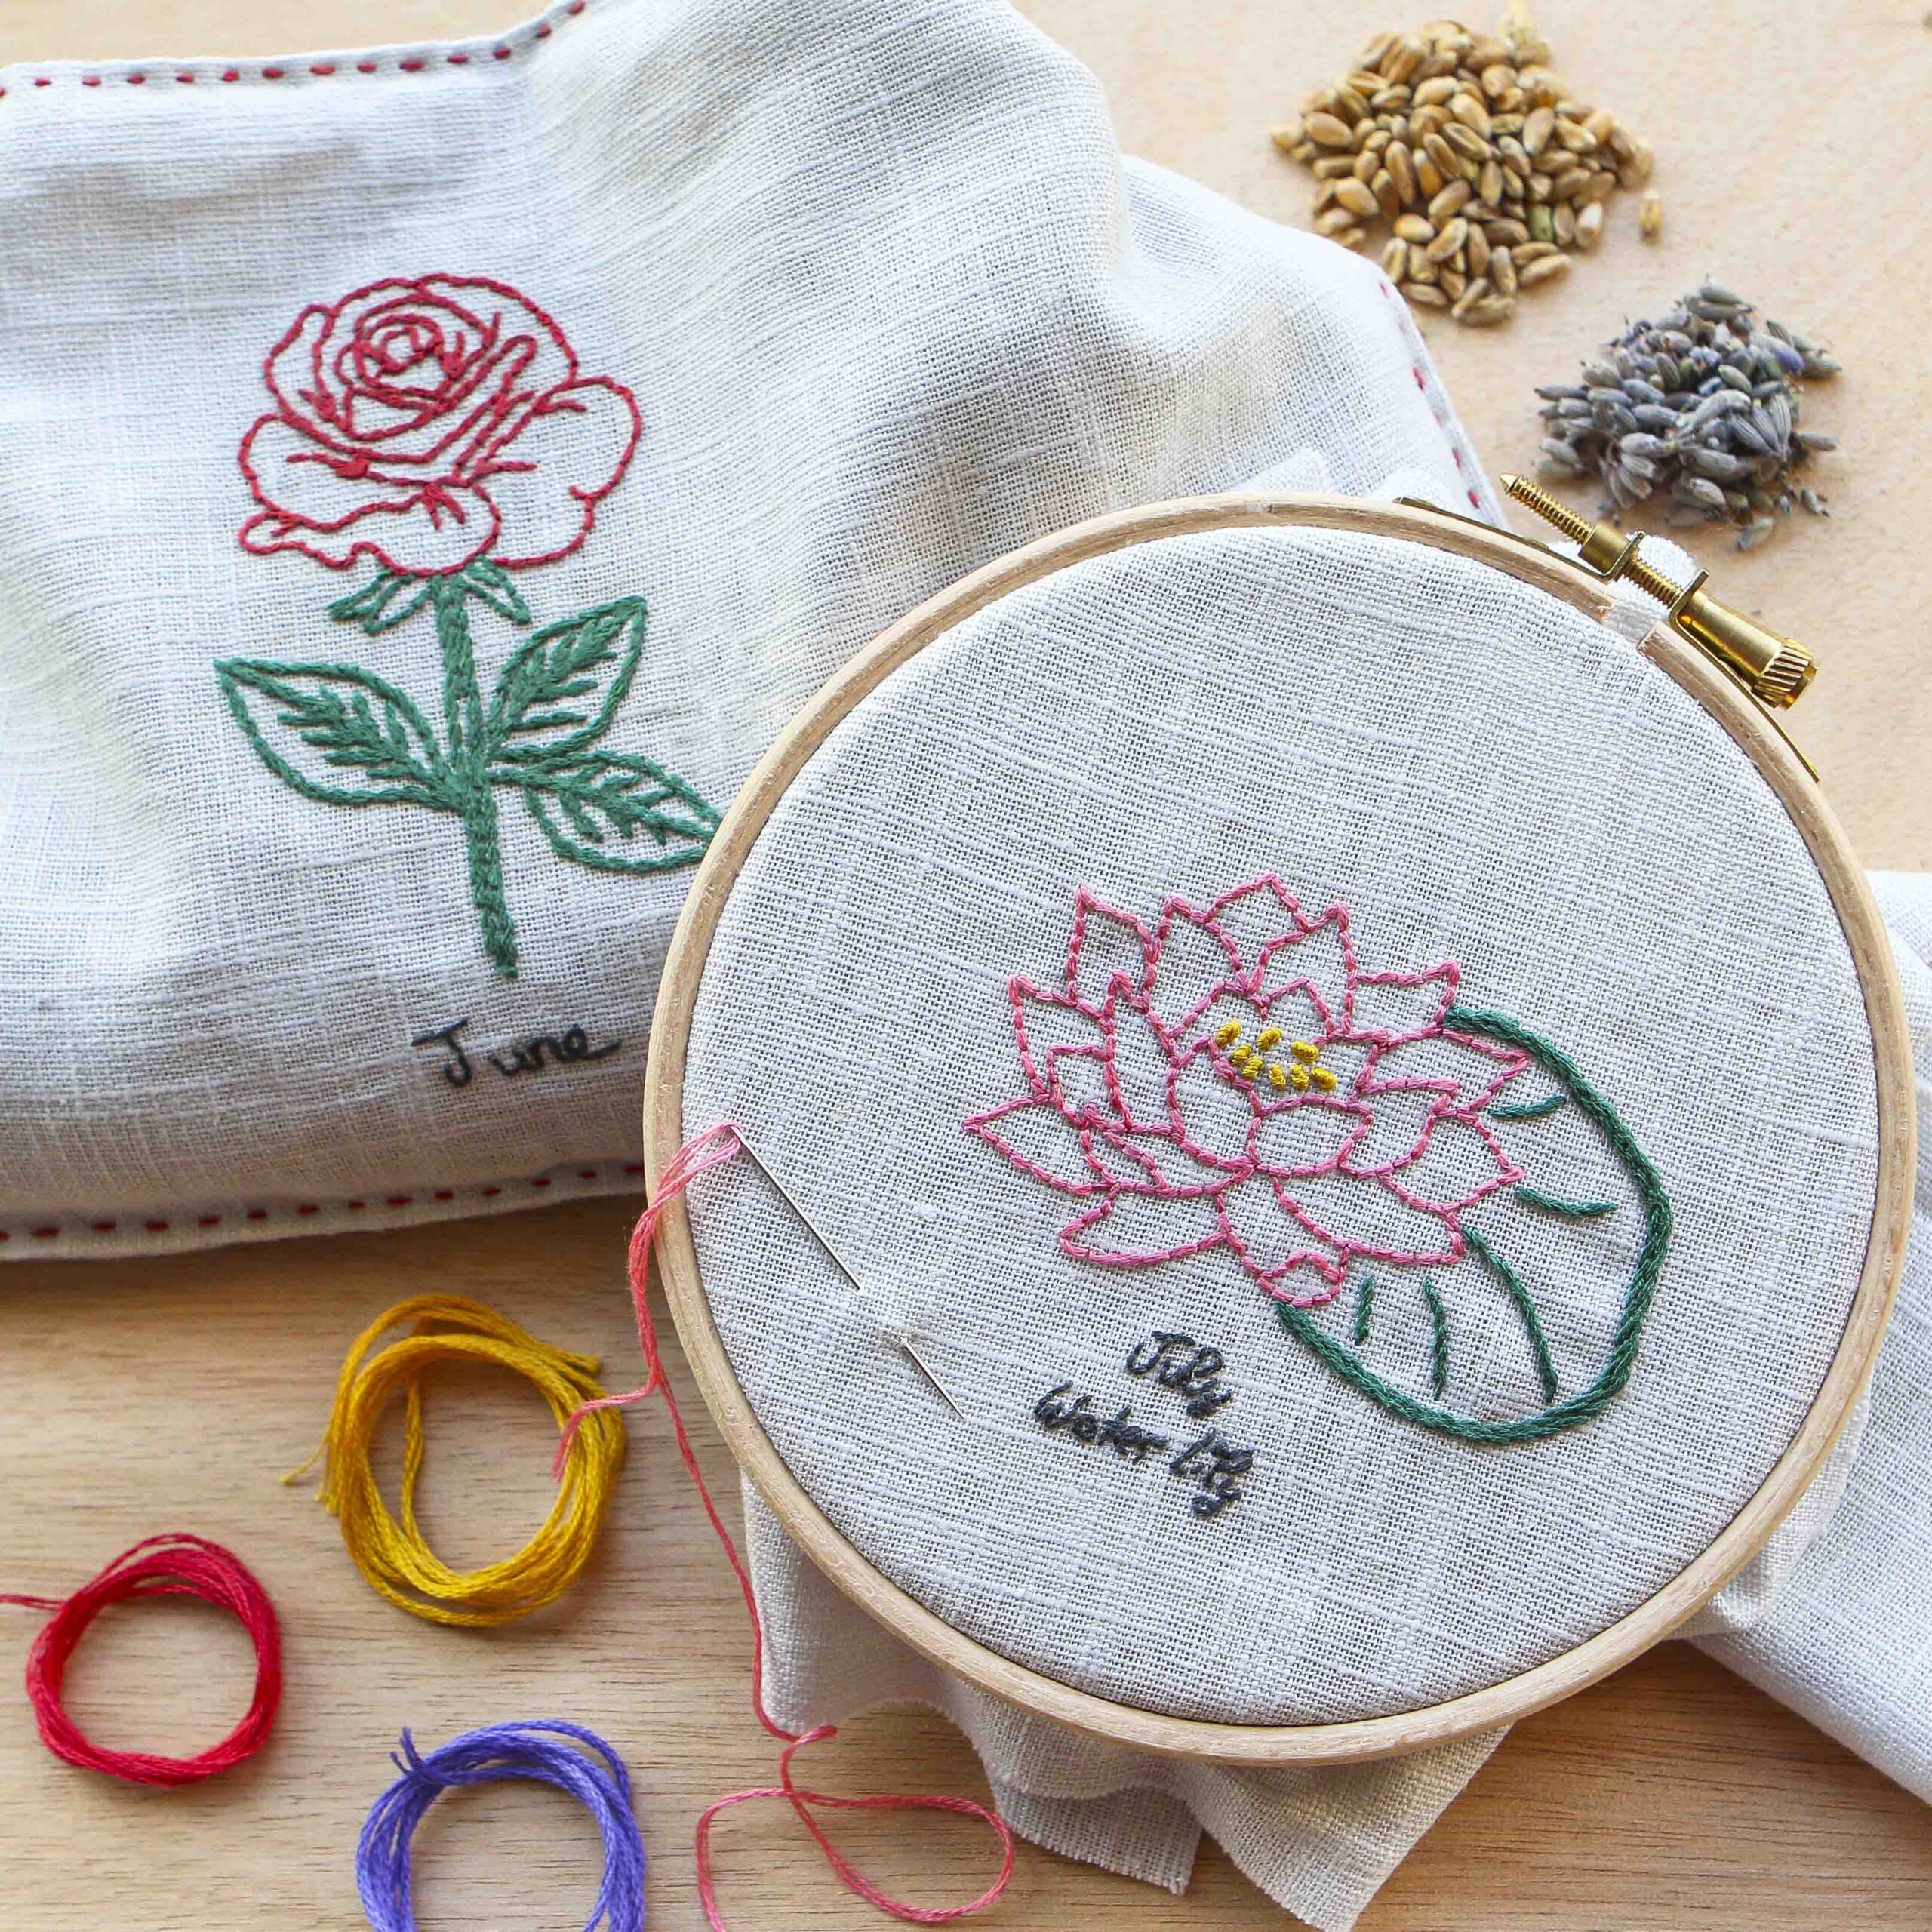 DIY Birth Flower Wheat bag Embroidery Craft Kit - StephieAnn Design